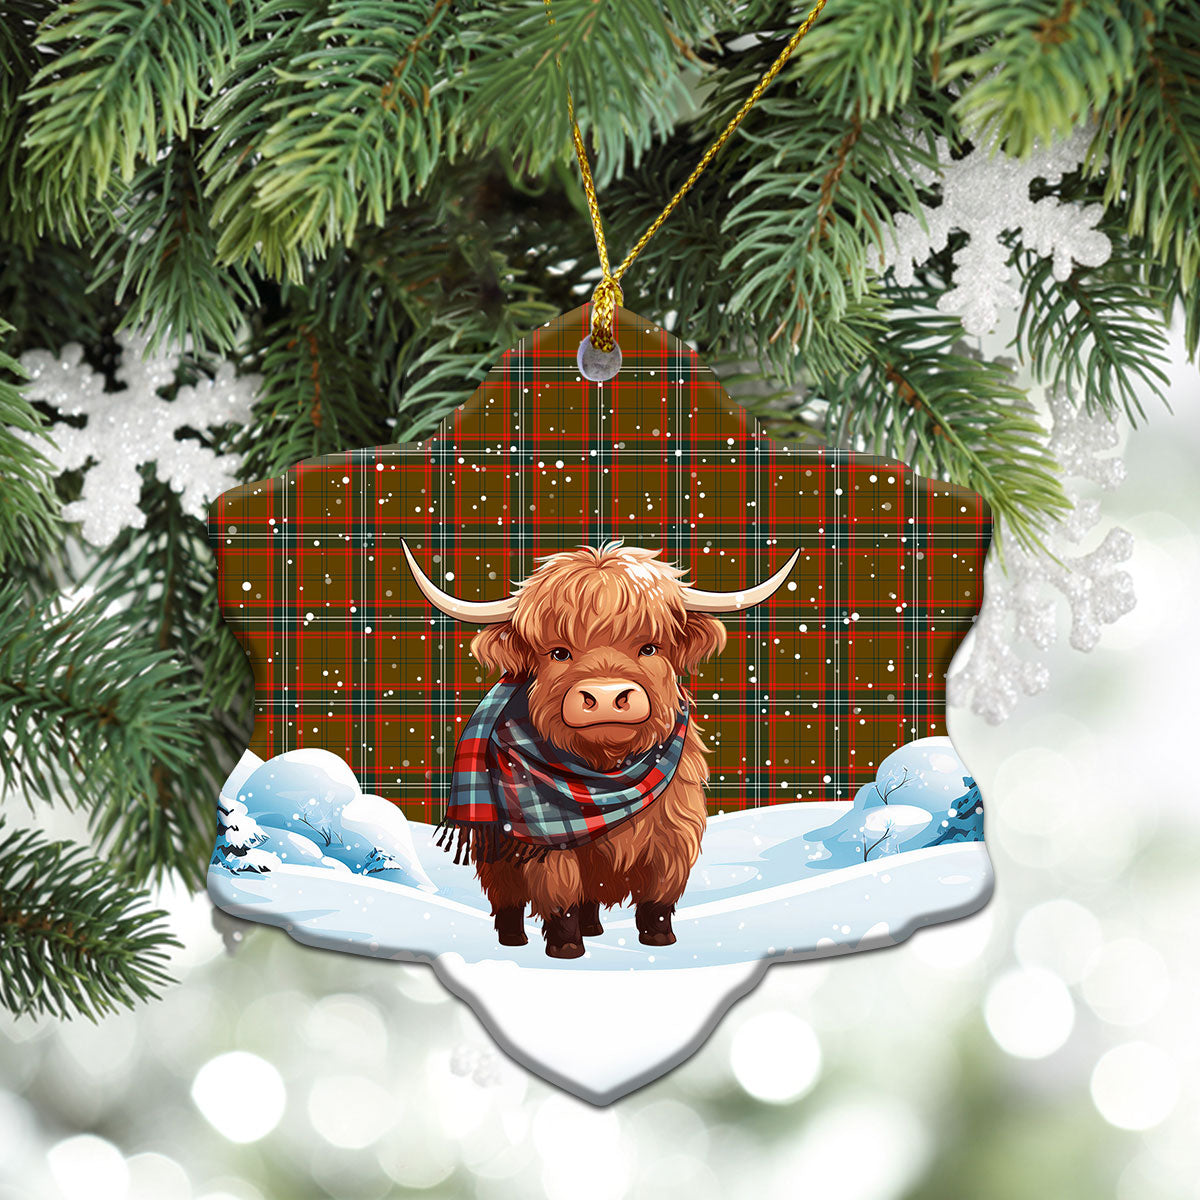 Seton Hunting Modern Tartan Christmas Ceramic Ornament - Highland Cows Snow Style